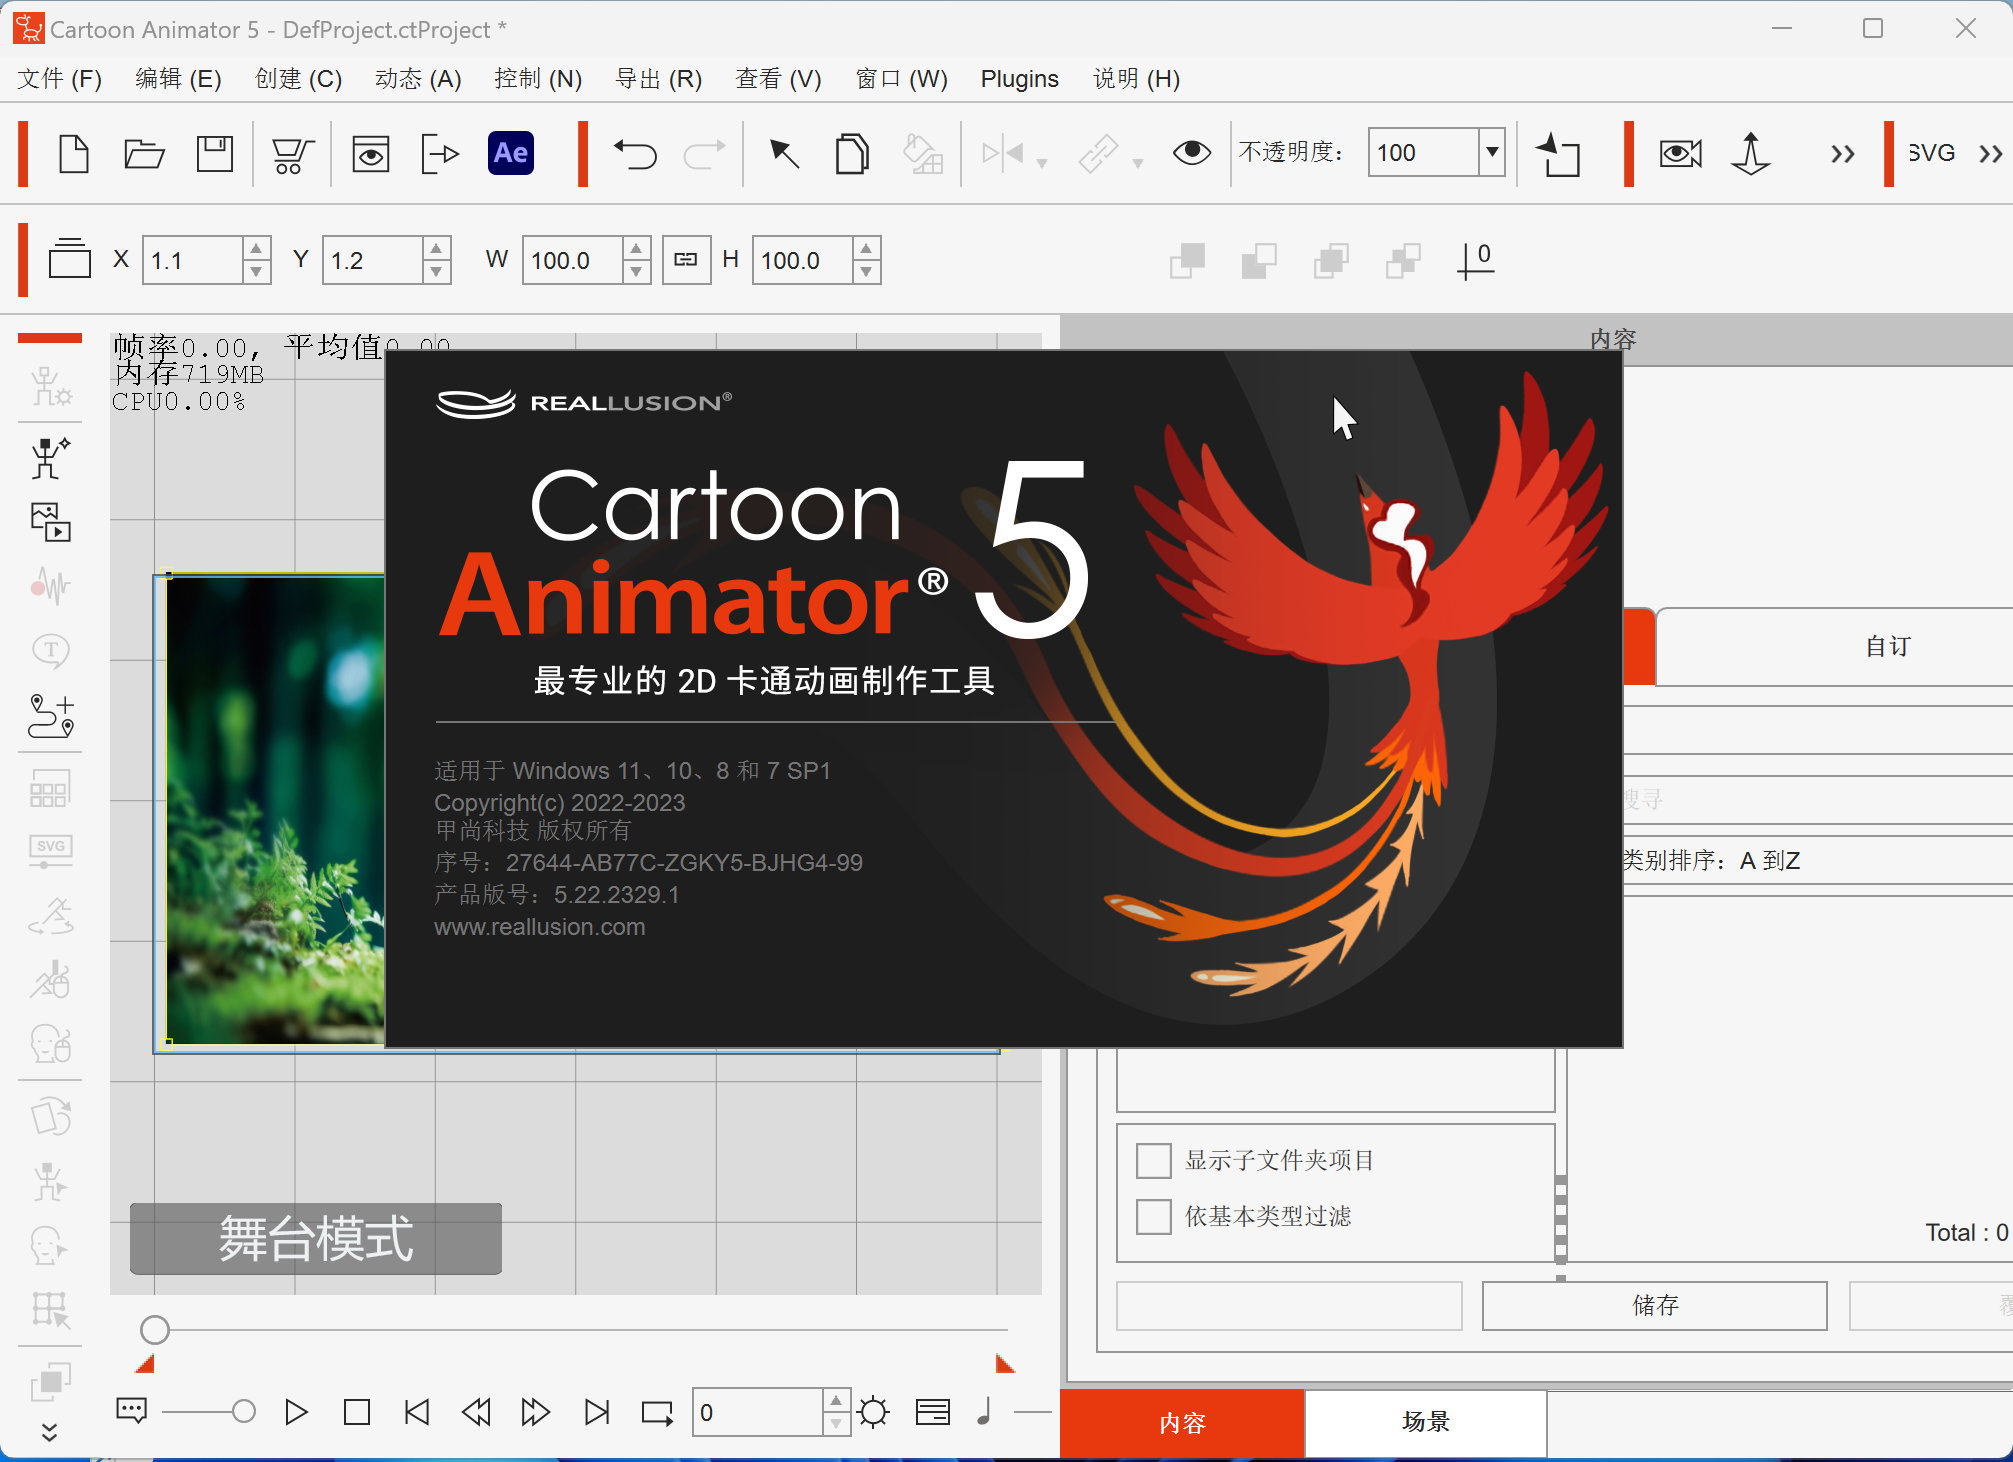 Reallusion Cartoon Animator 5.22.2329.1 x64 Multilingual 中文注册版 - 专业2D动画软件